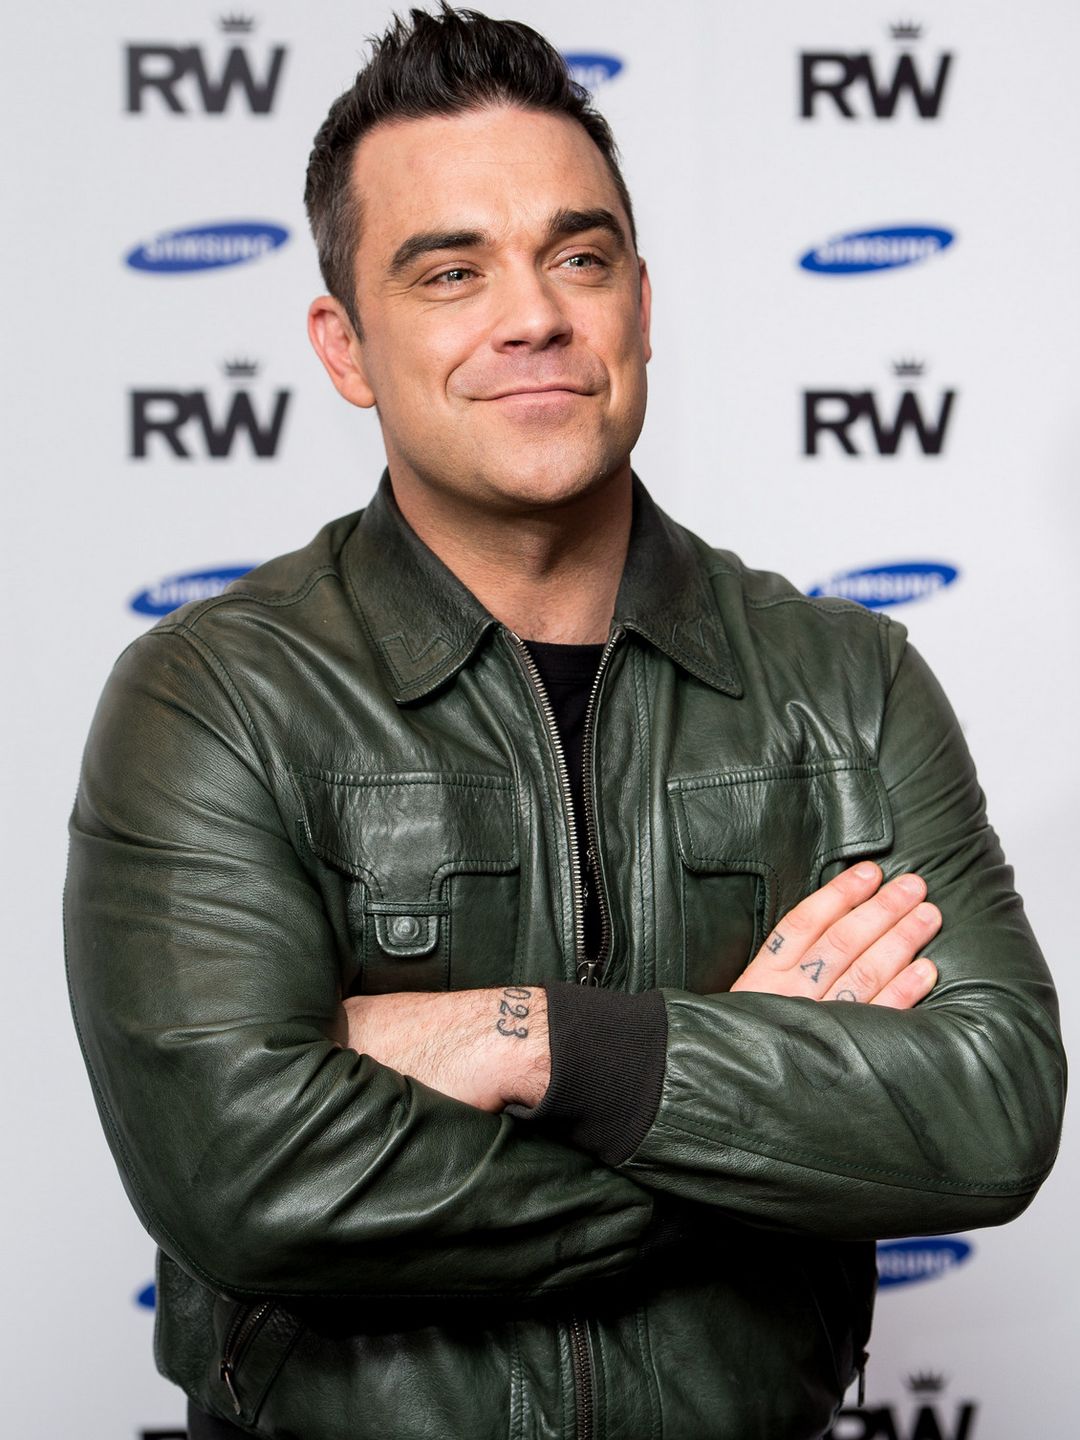 Robbie Williams way to fame